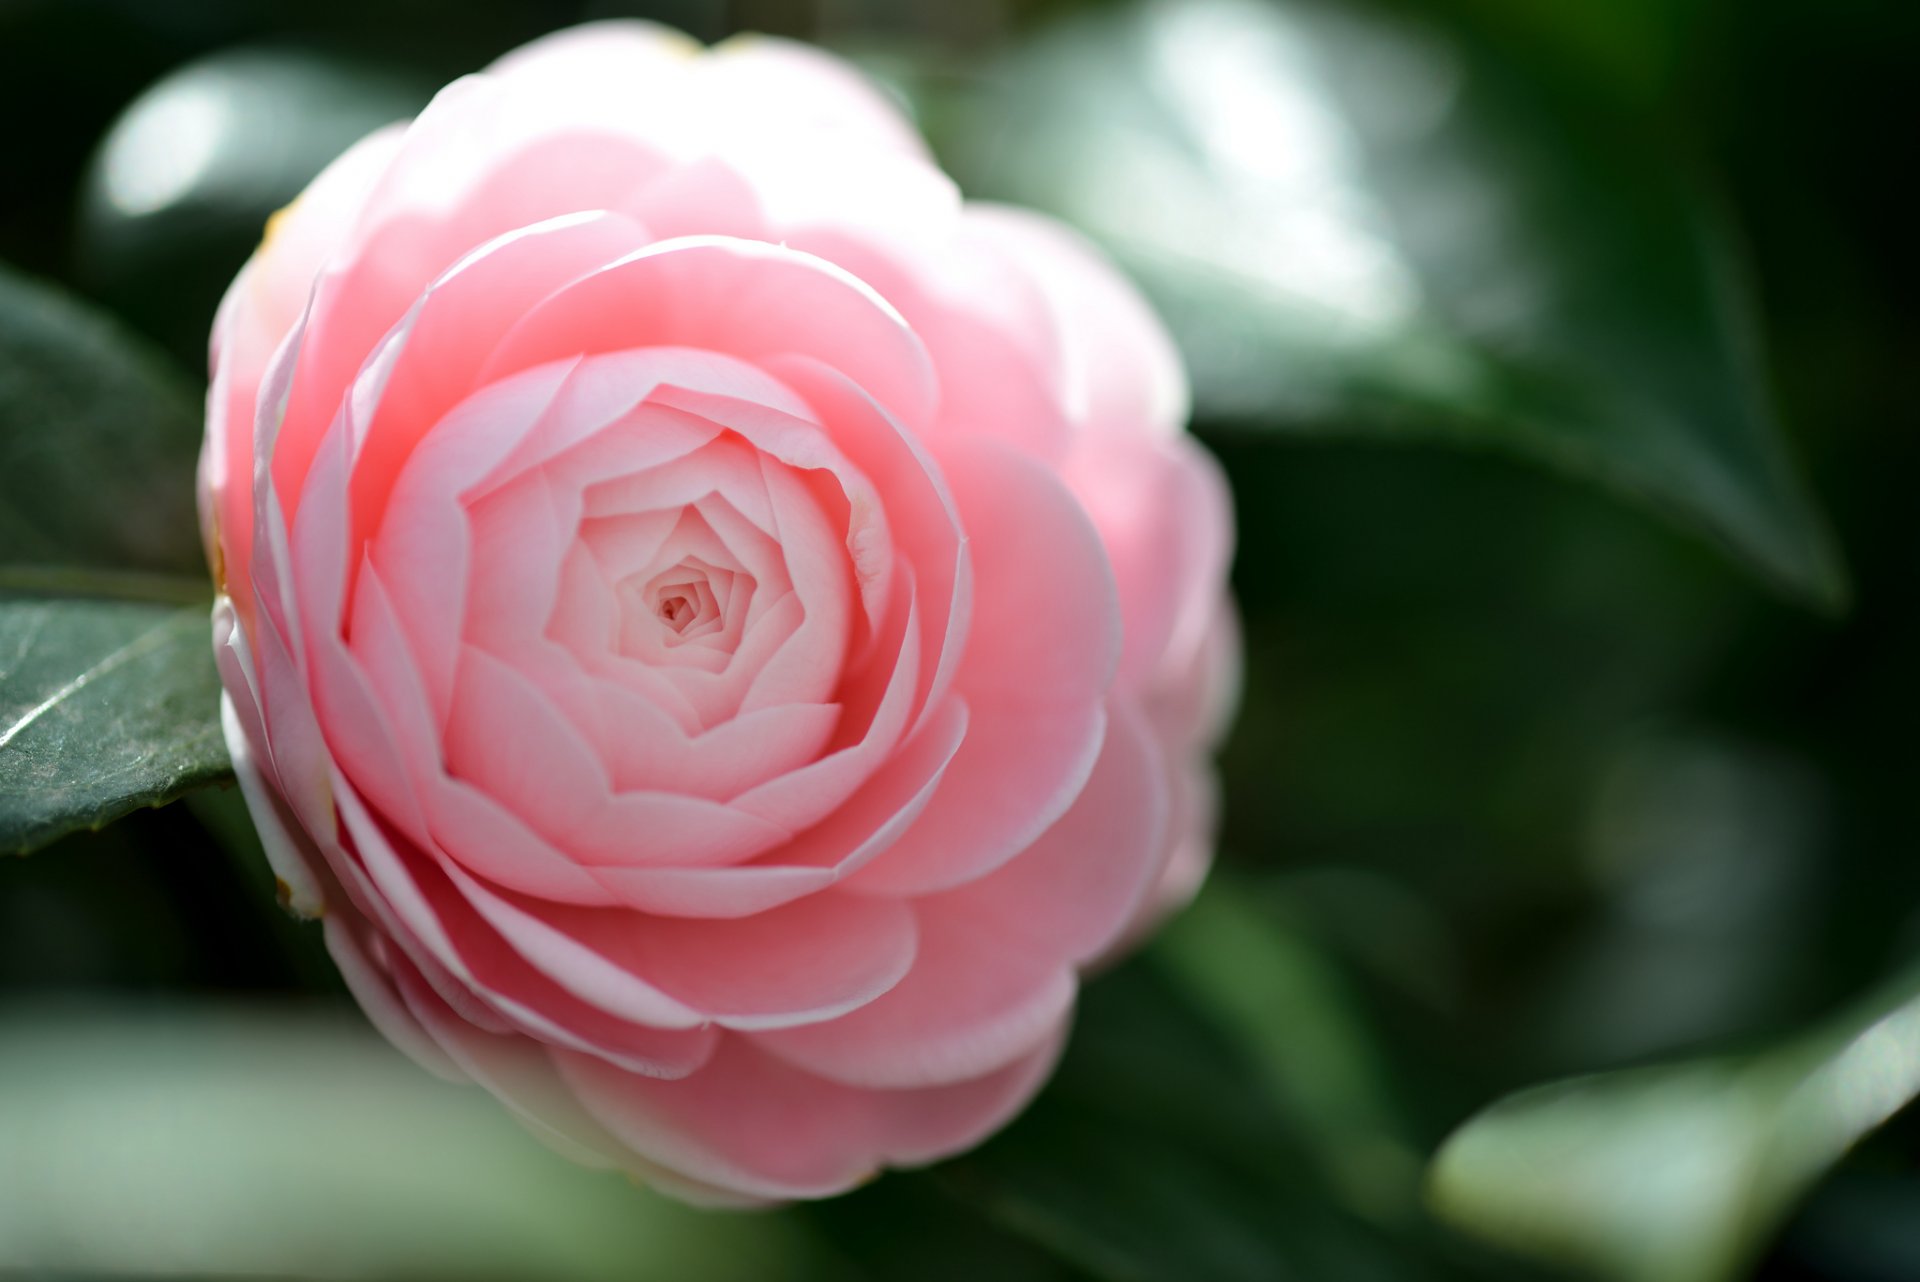 flower camellia close up pink